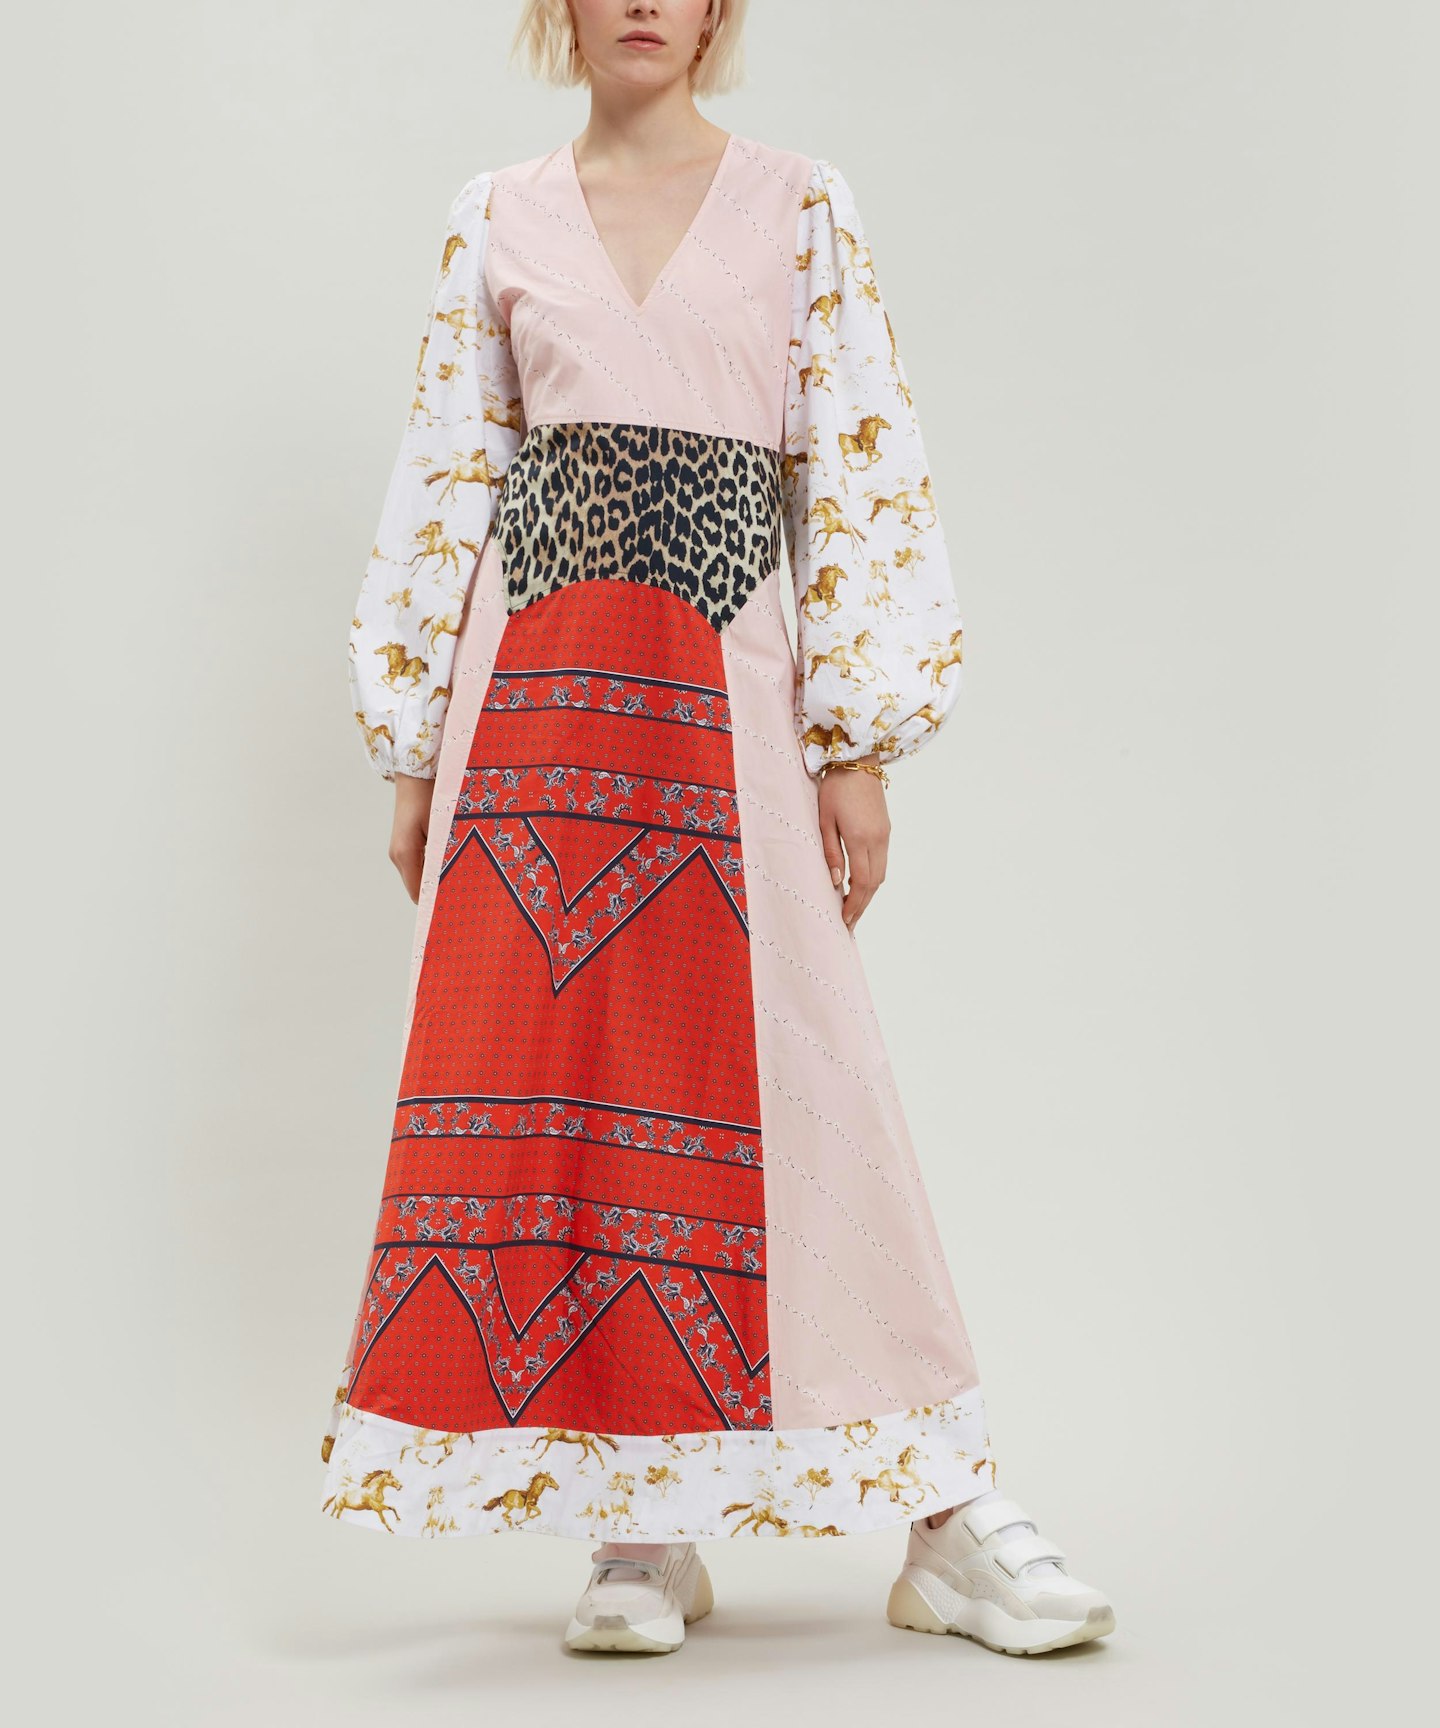 Ganni, Mixed Print Dress, £270